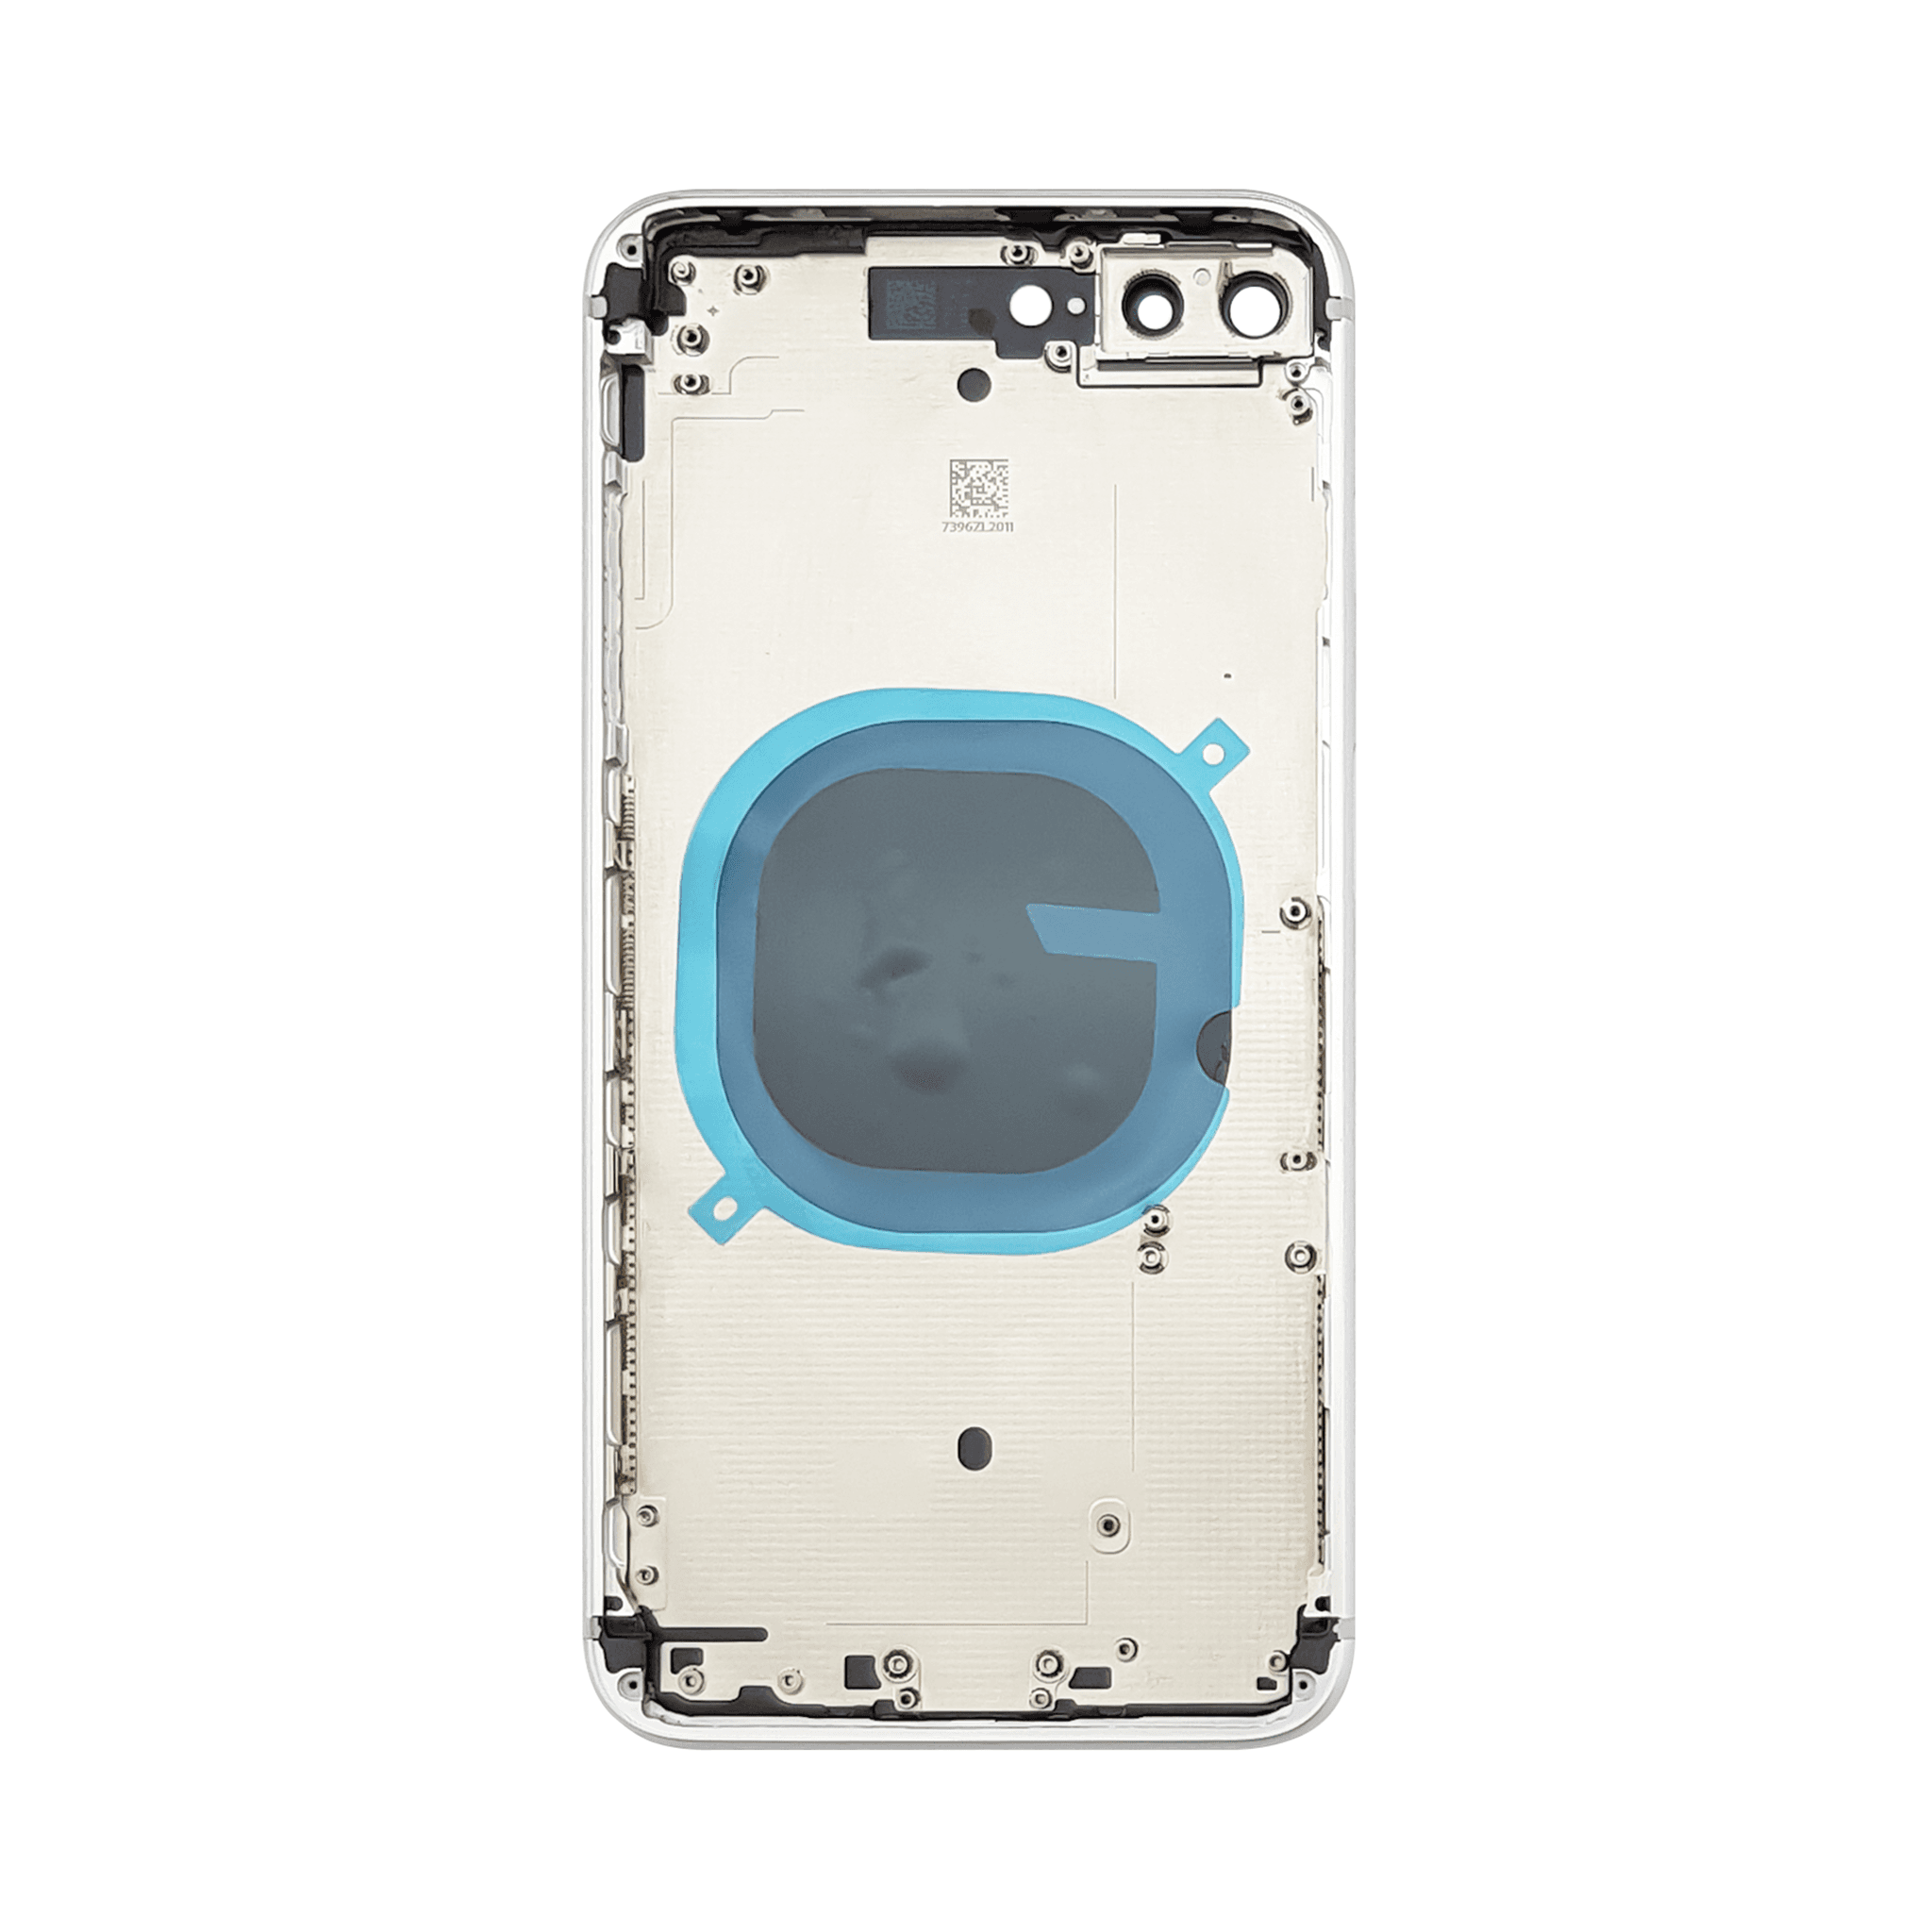 Korpus + klapka baterii iPhone 8 plus biały